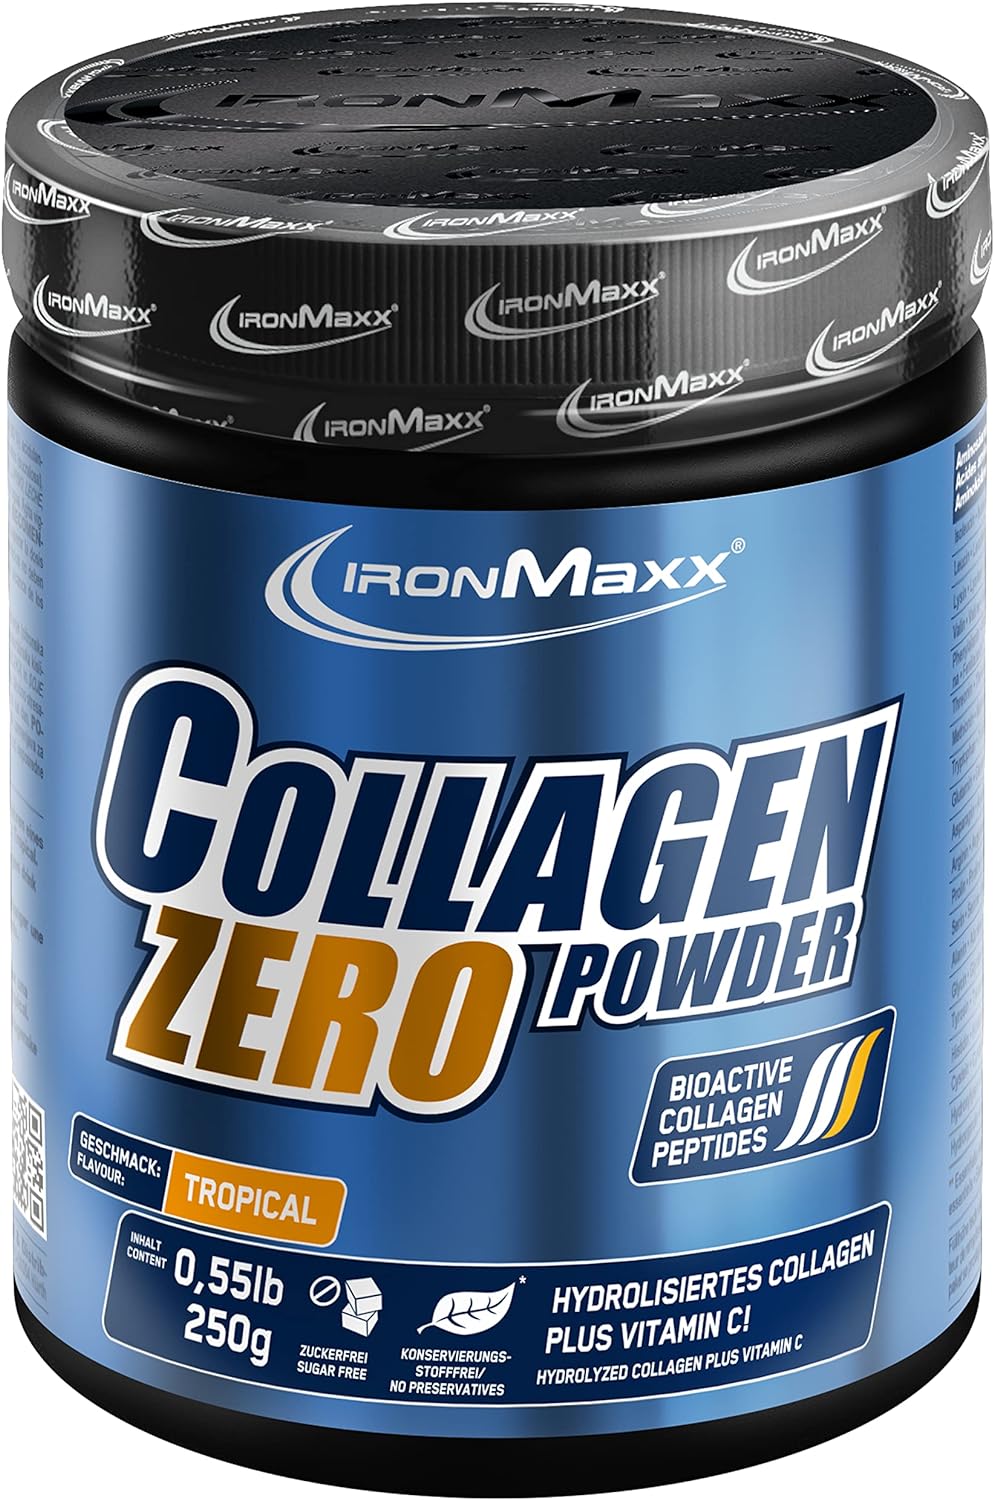 IronMaxx Collagen Powder Zero (250g Dose)